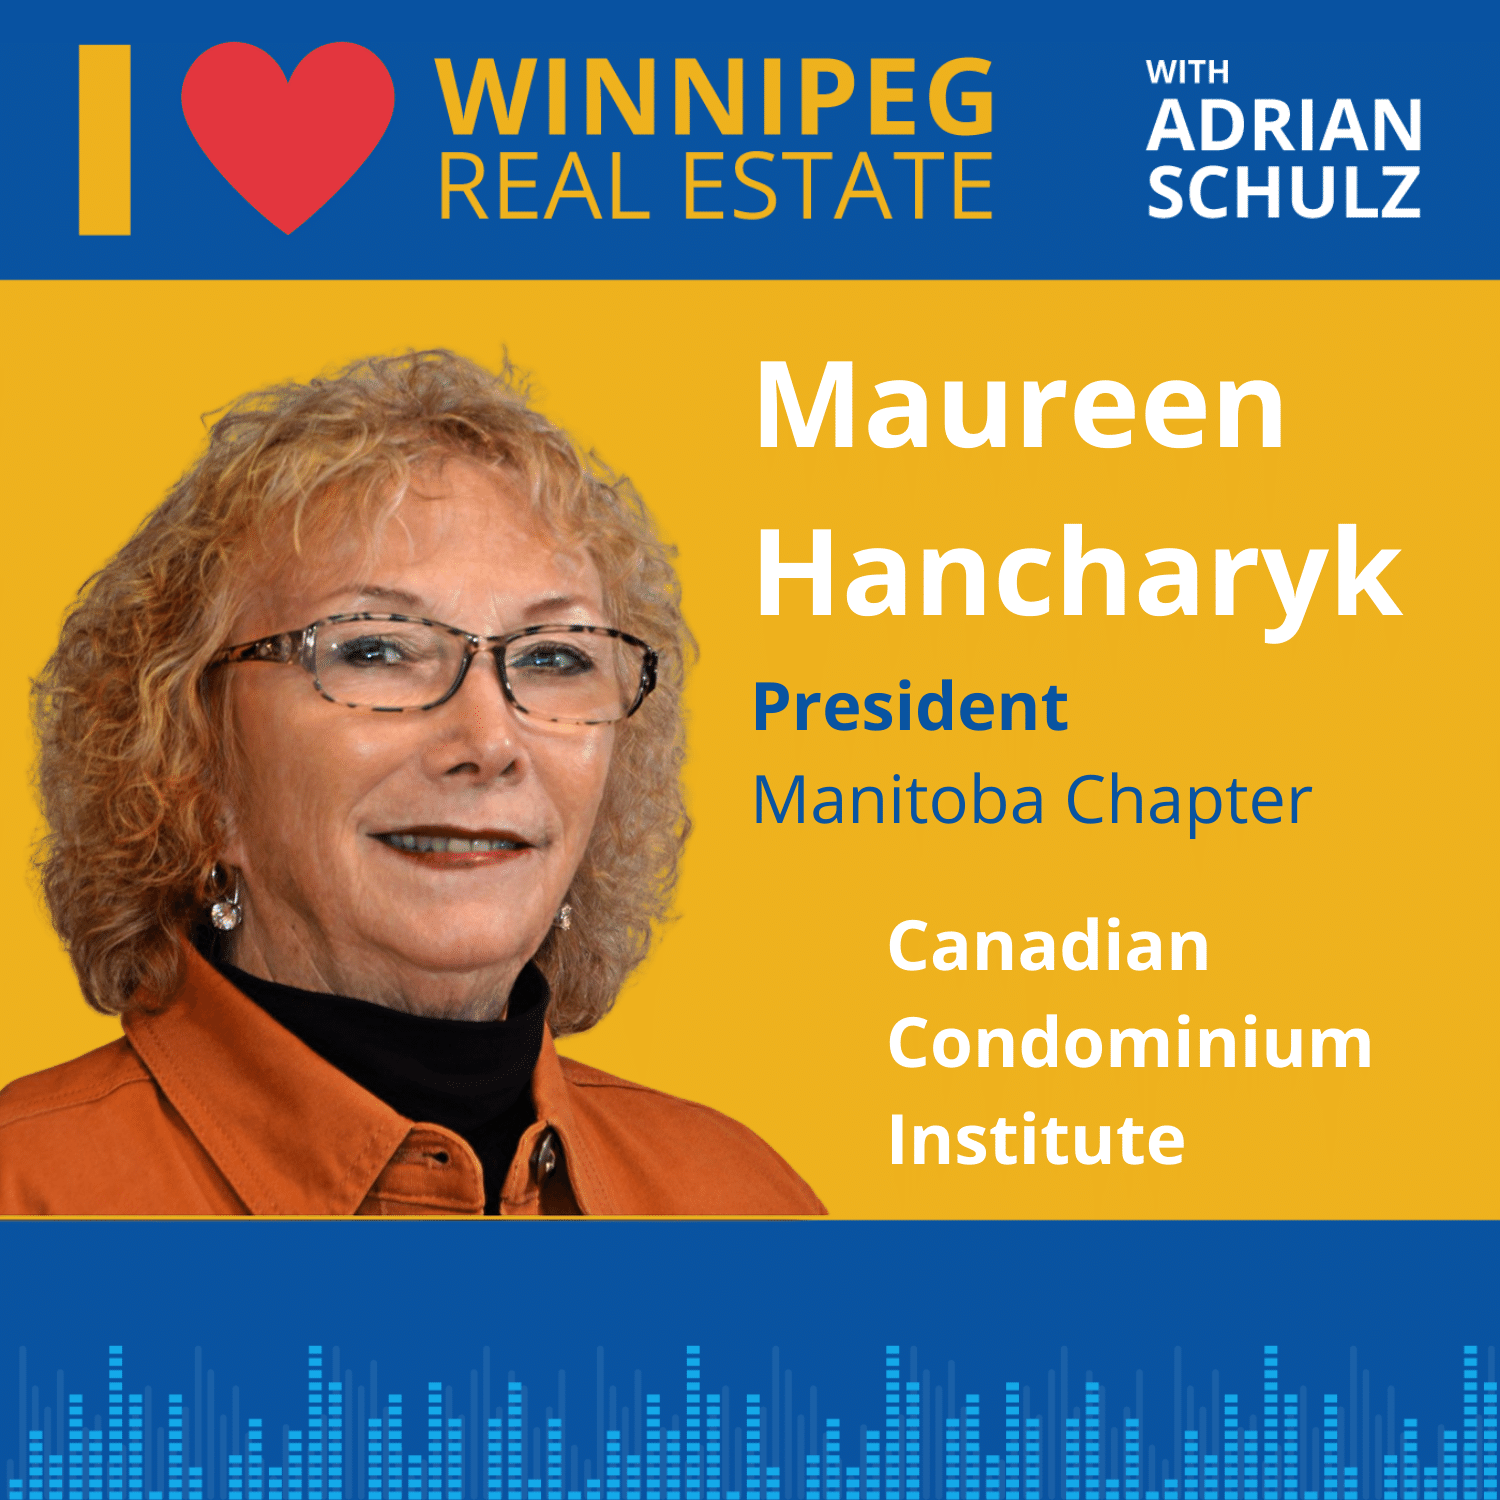 Maureen Hancharyk on the Canadian Condominium Institute